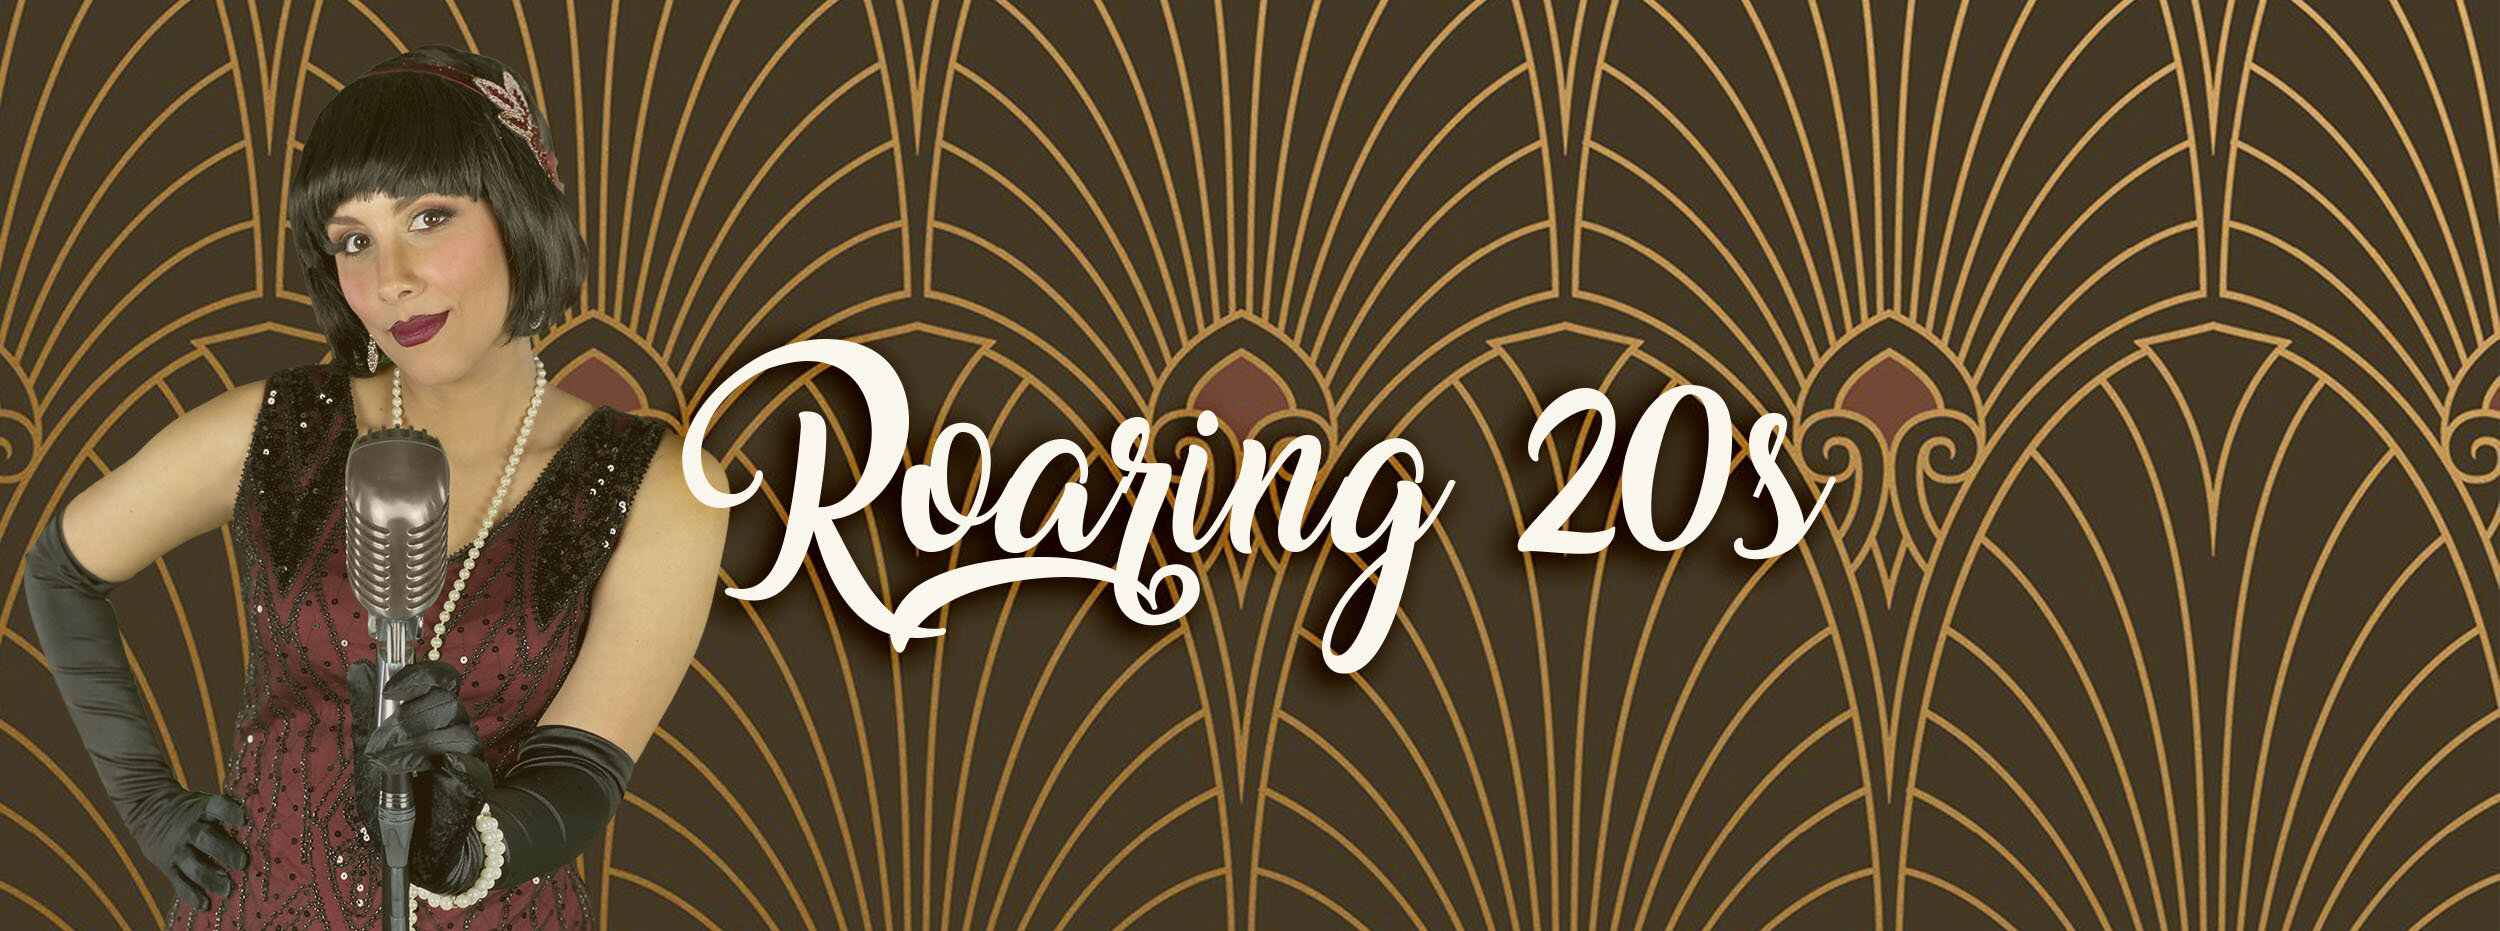 Roaring 20's | 1920s